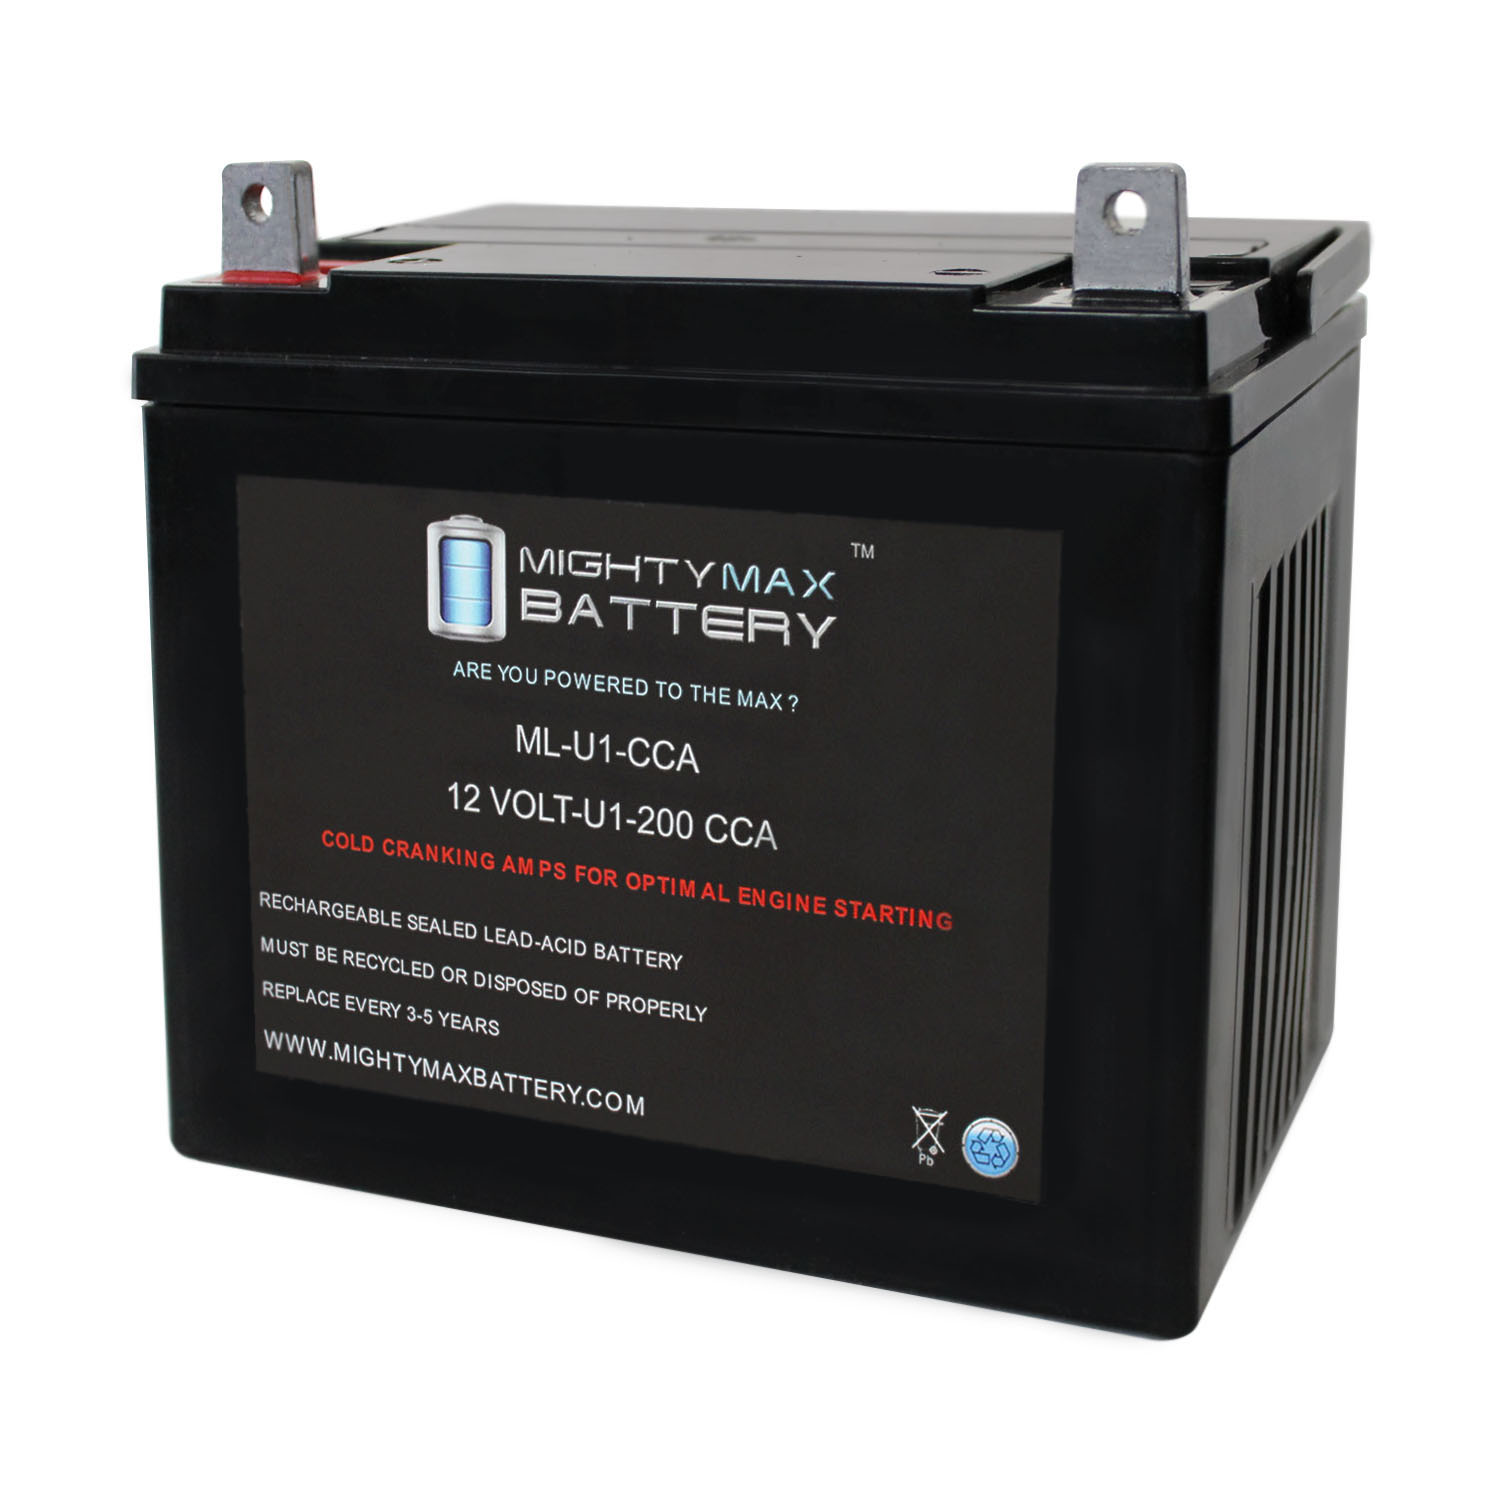 Black & Decker CMM625 Type 3 Lawn Mower Replacement Battery